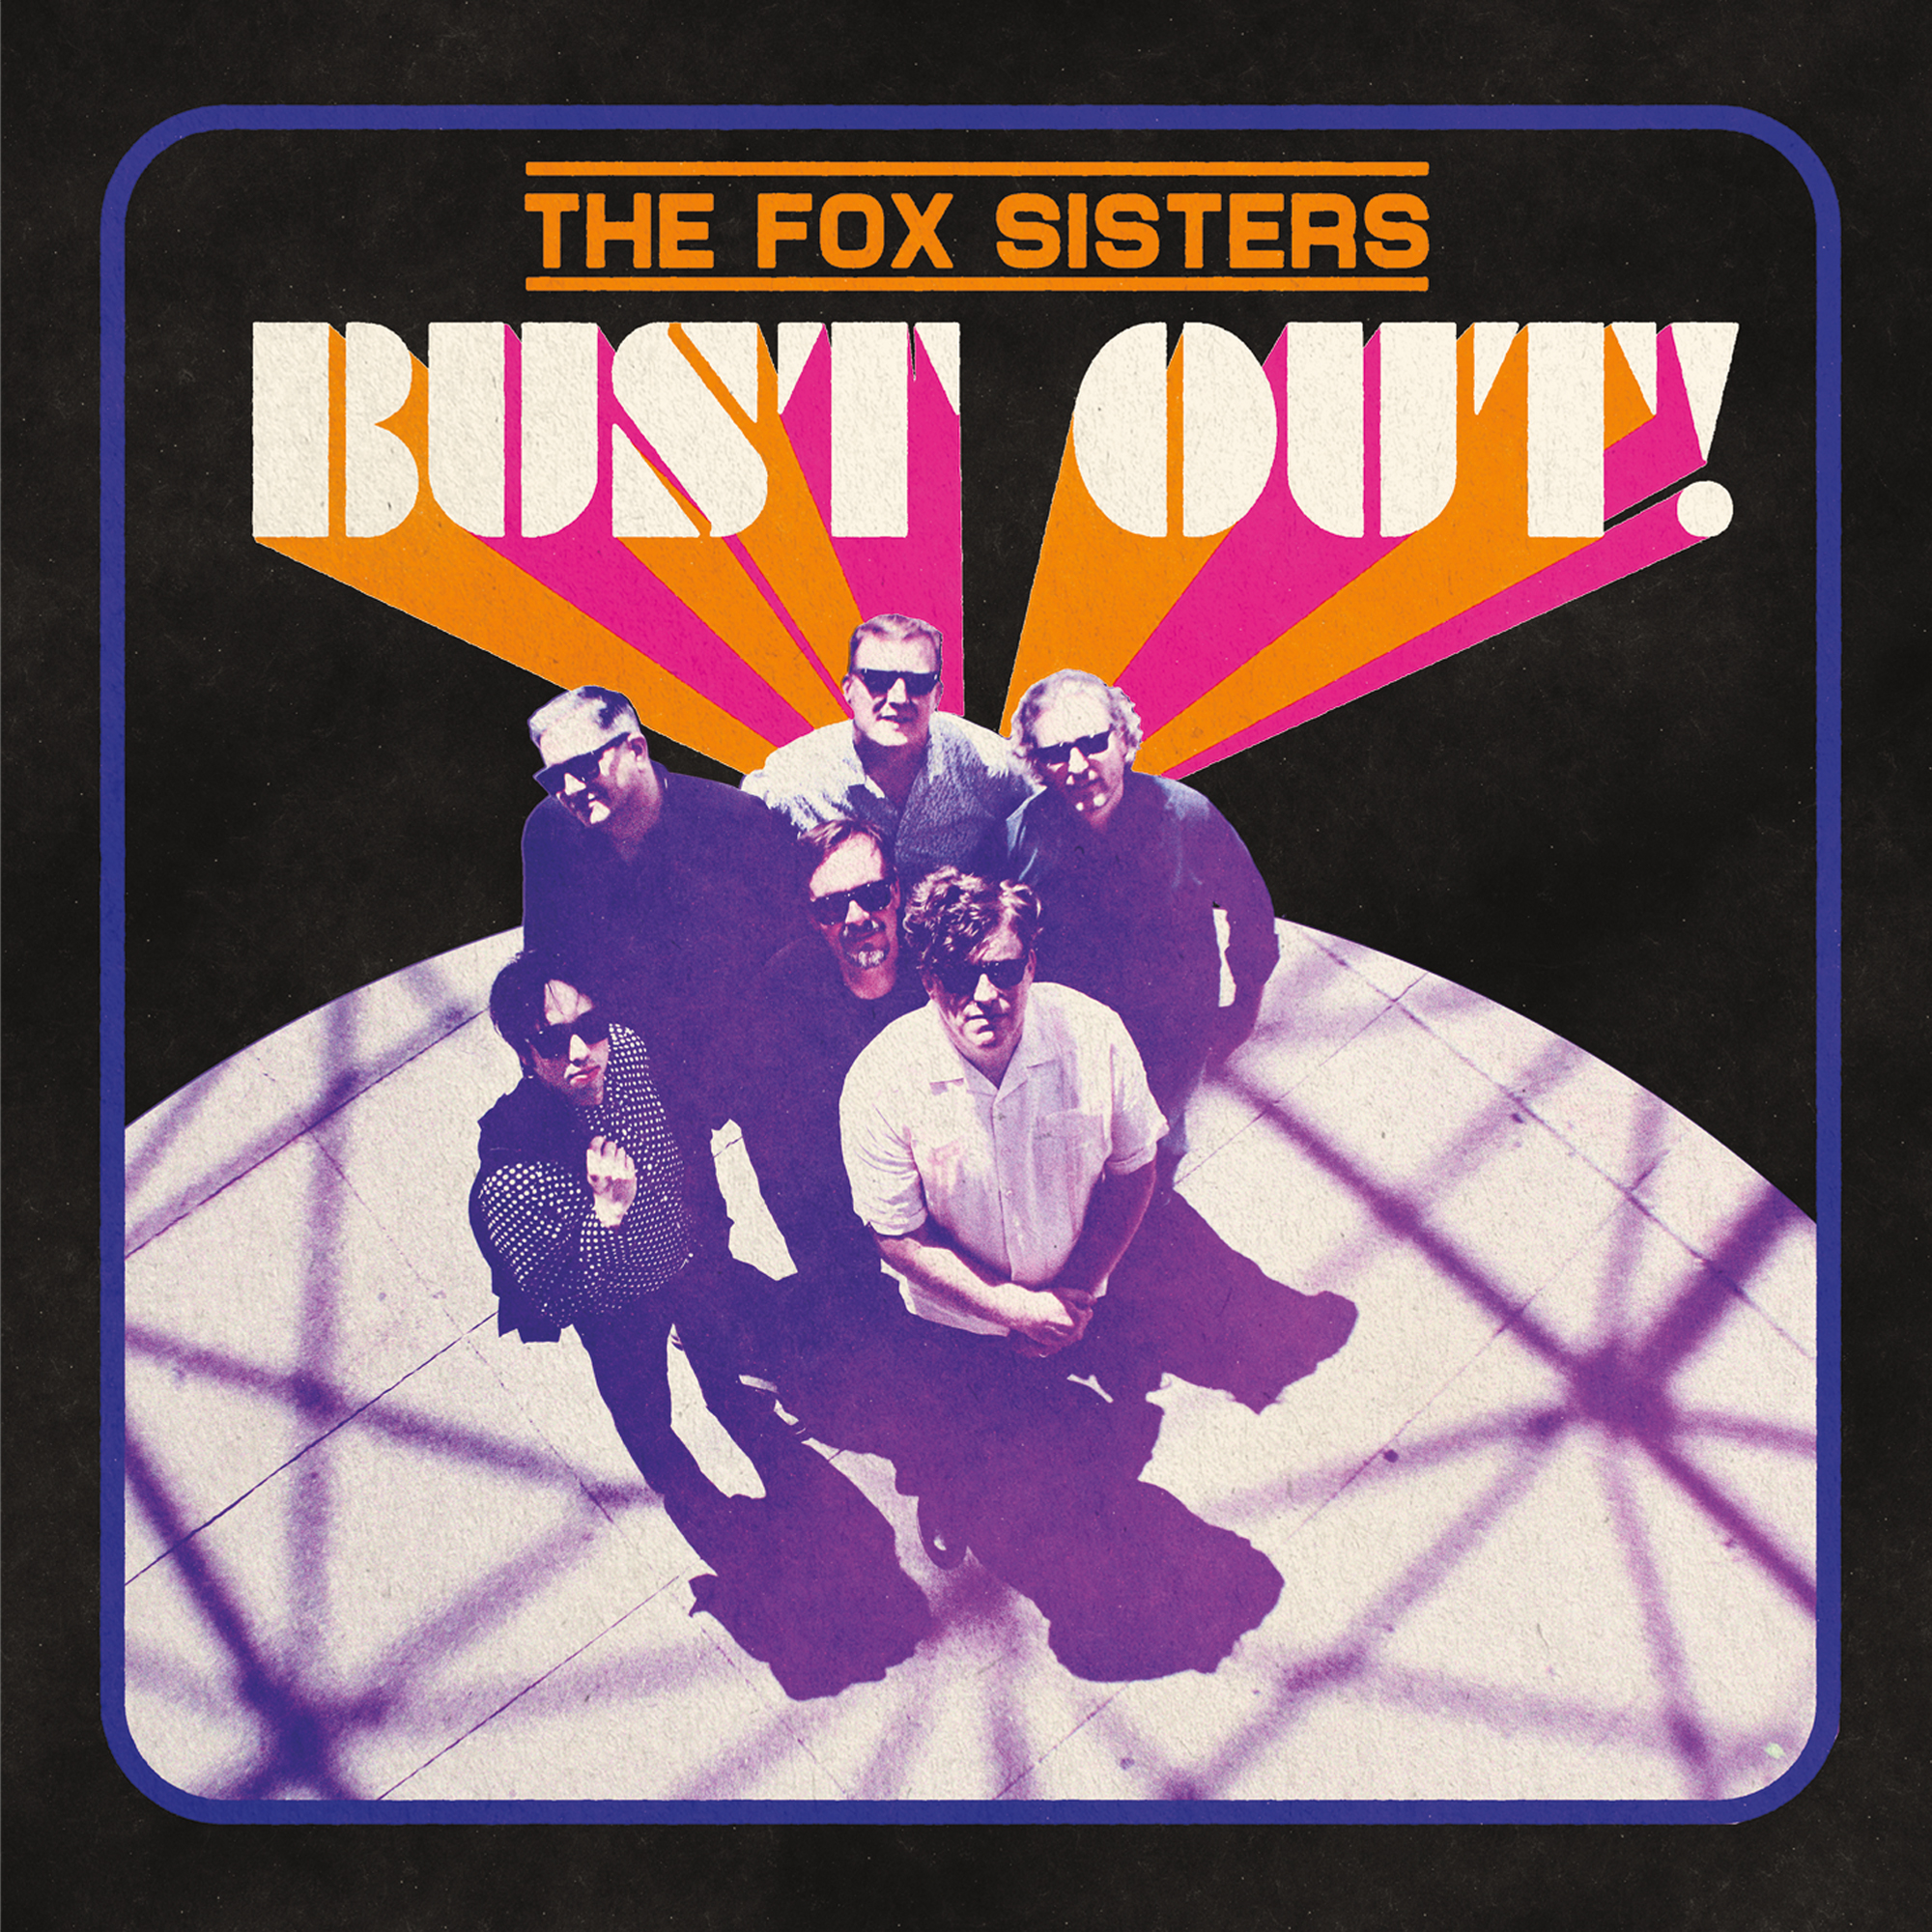 Funk Soul sisters. Suffer Fools. Фокс Систерс Самара. Dreams Fox sisters. Sister fox